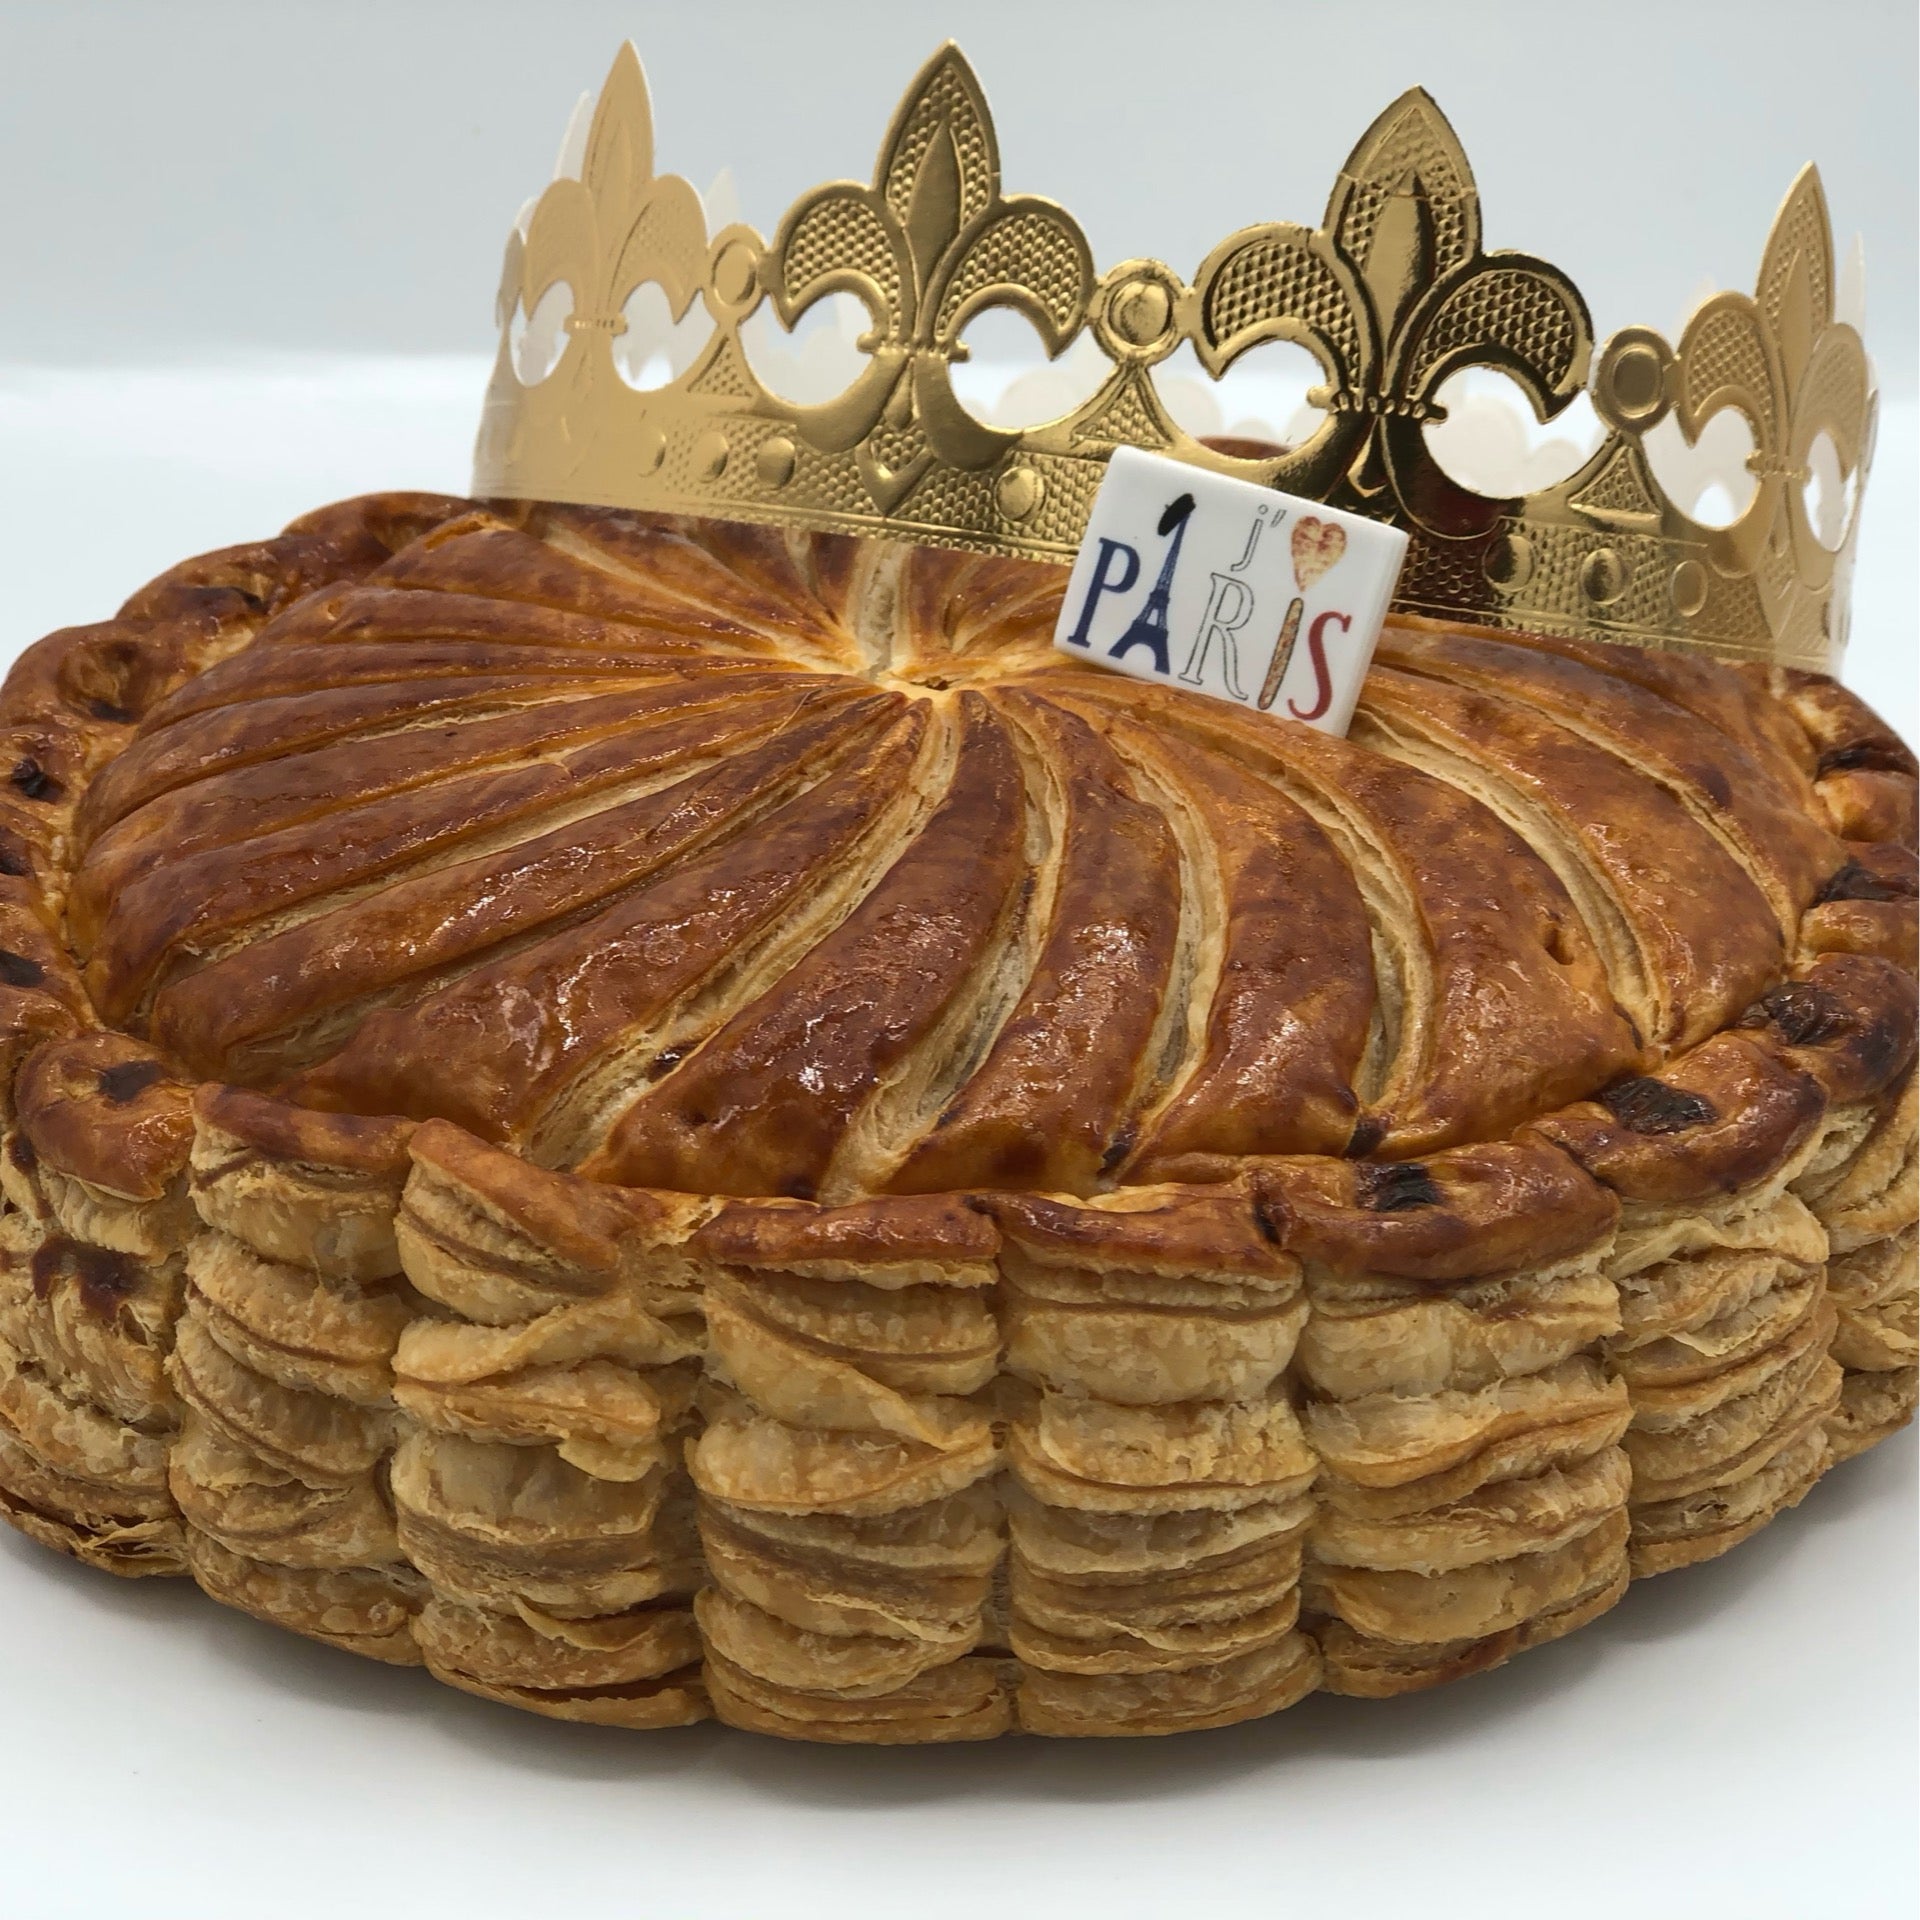 Large Galette des Rois (King's Cake)